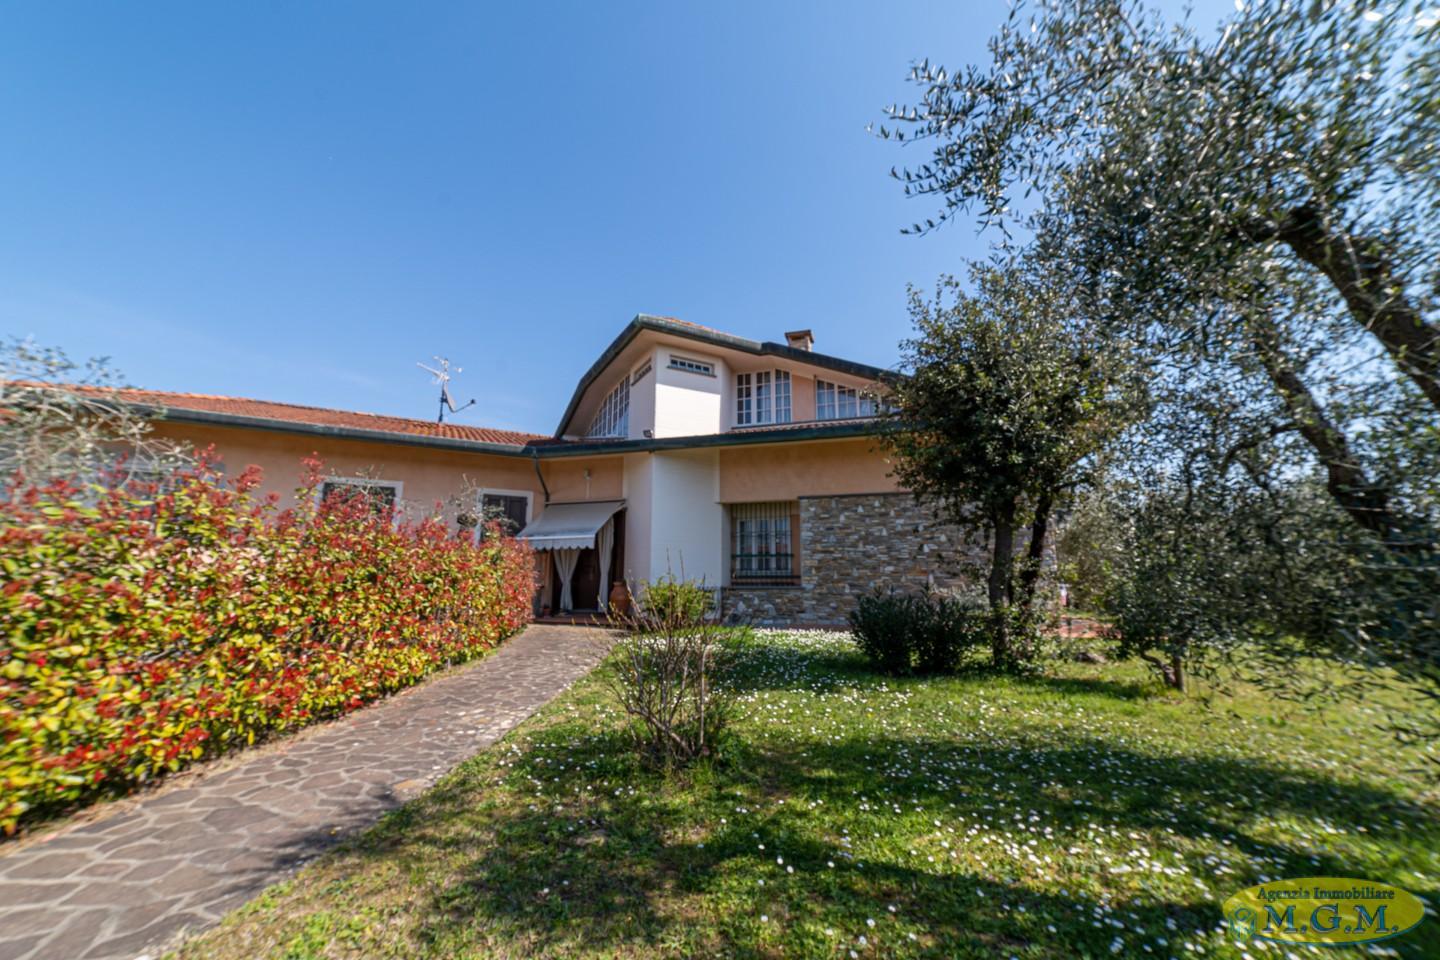 Mgmnet.it: Villa singola in vendita a Santa Maria a Monte